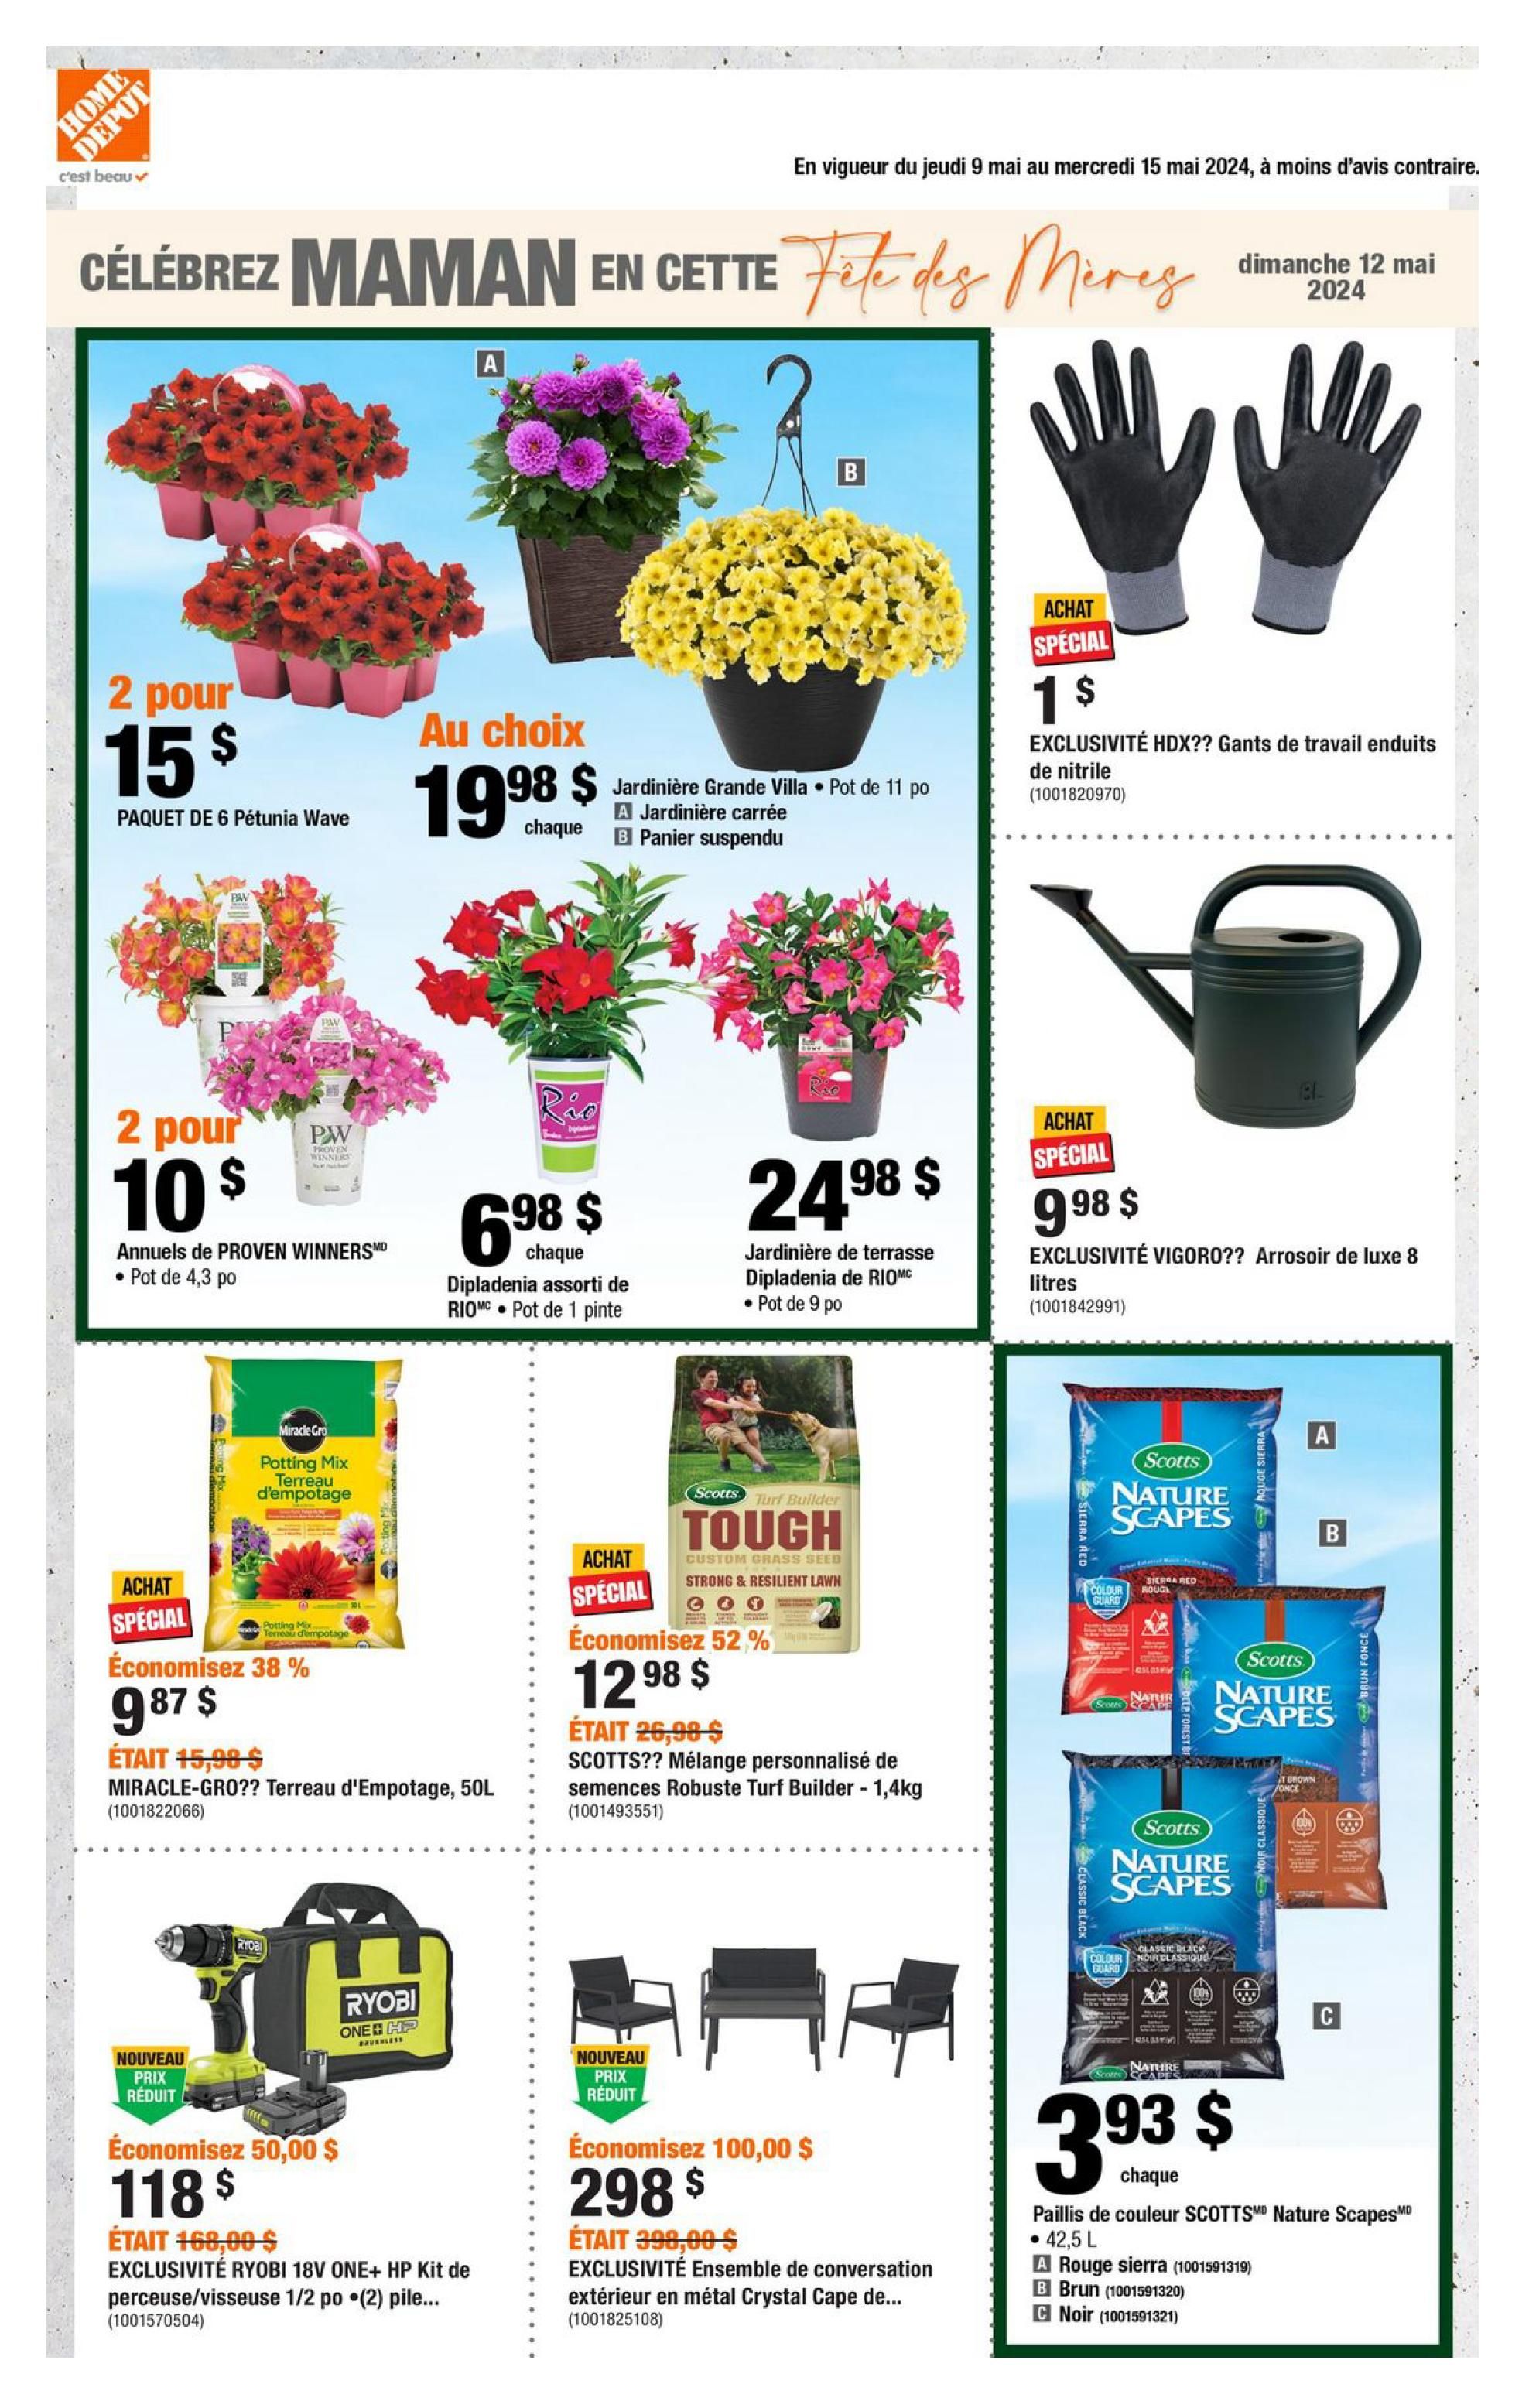 Home Depot - Quebec - Weekly Flyer Specials